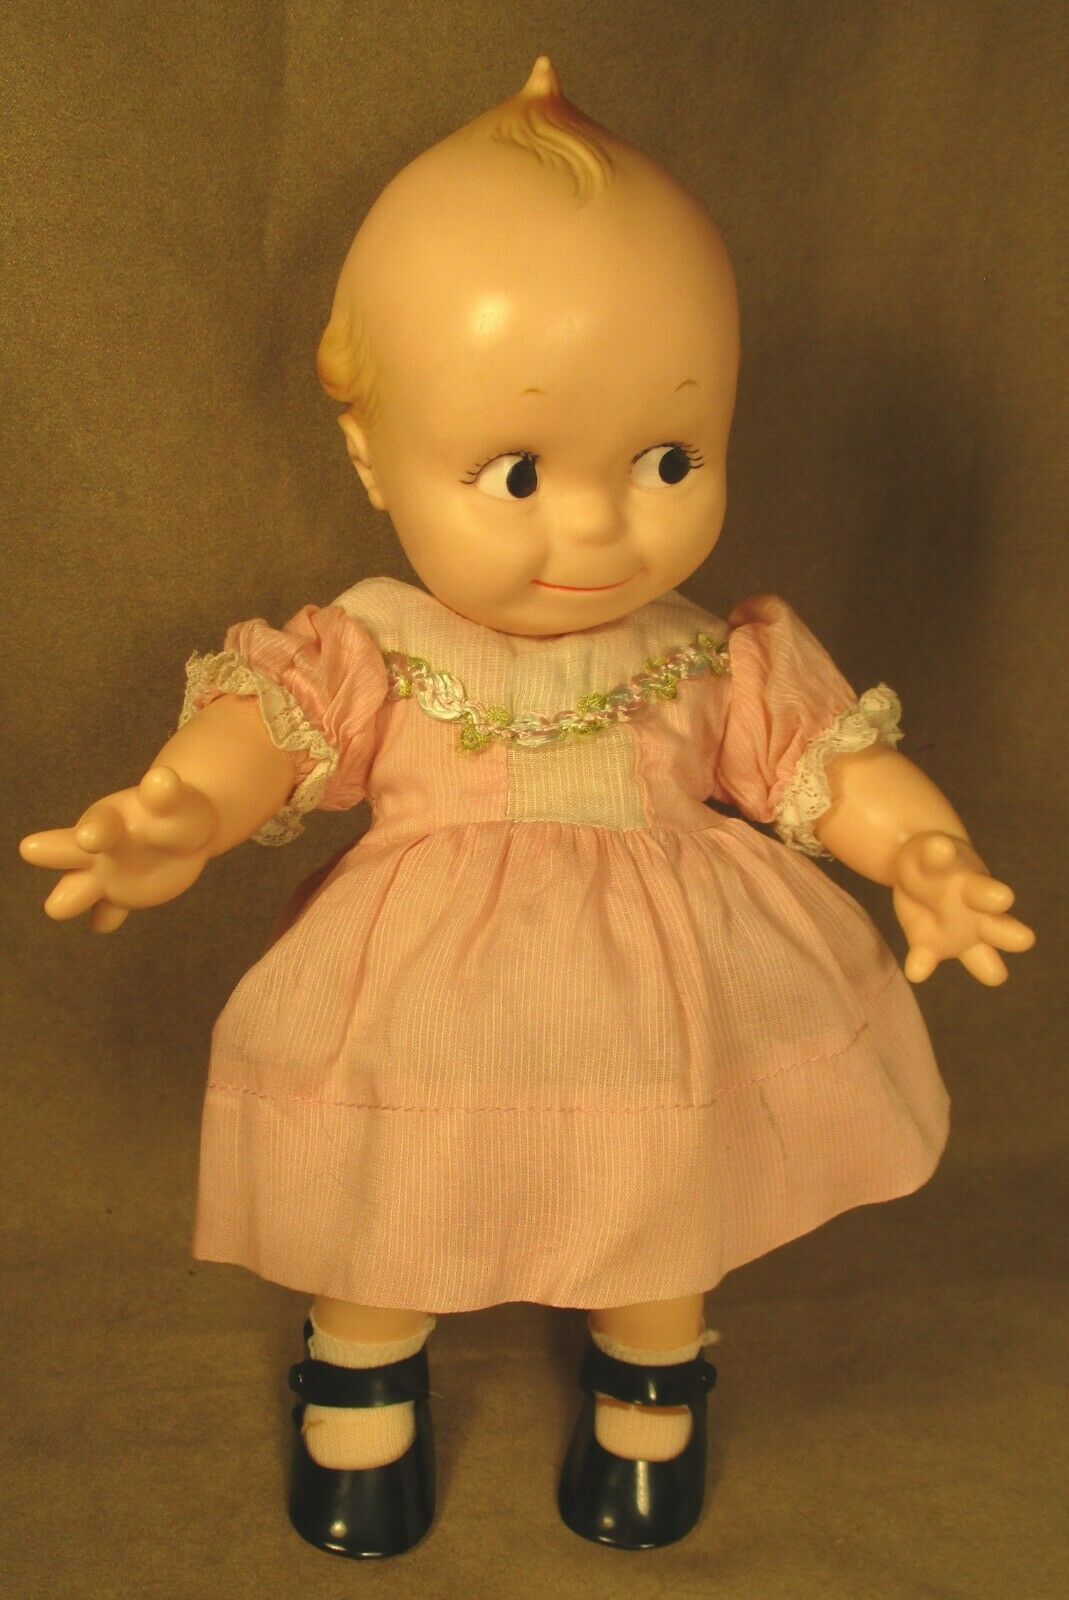 Vintage Jesco Cameo 11" Kewpie Doll - In Pink & White Dress - Hard Plastic